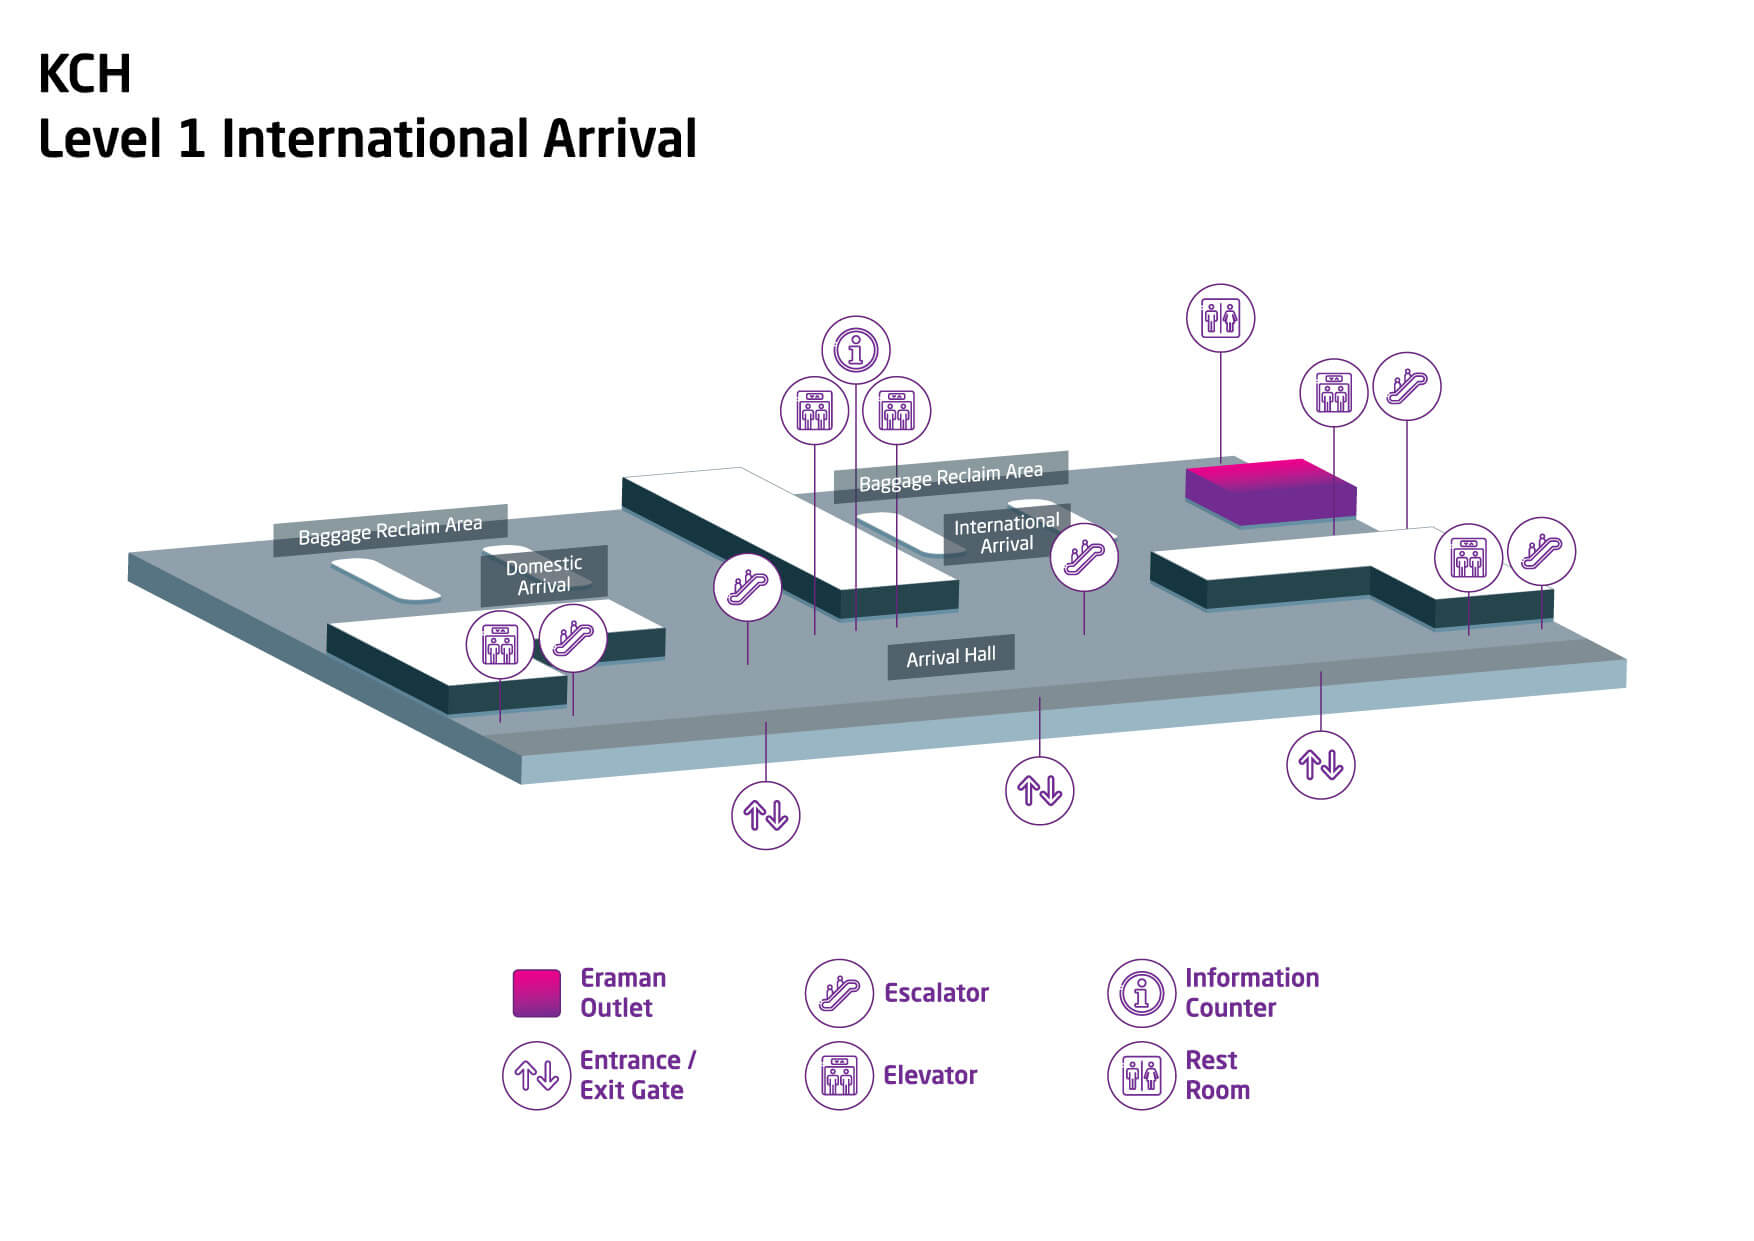 Kuching International Airport Level 1 (International Arrival)